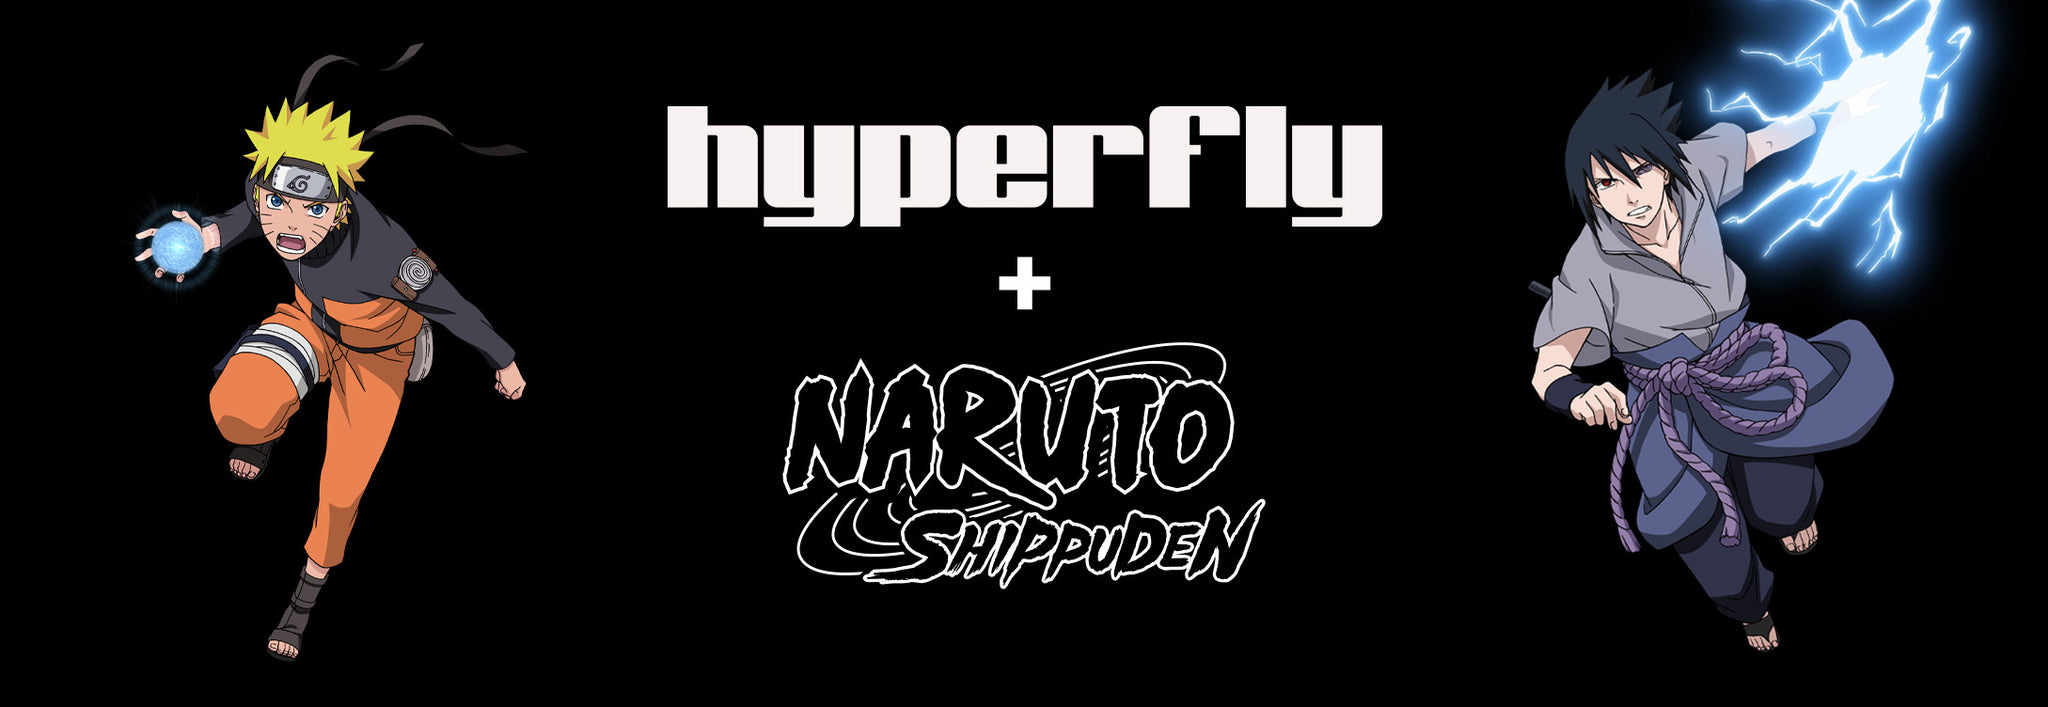 Texte qui dit Hyperfly + Naruto Shippuden avec une image de Naruto Uzumaki et Sasuke Uchiha.